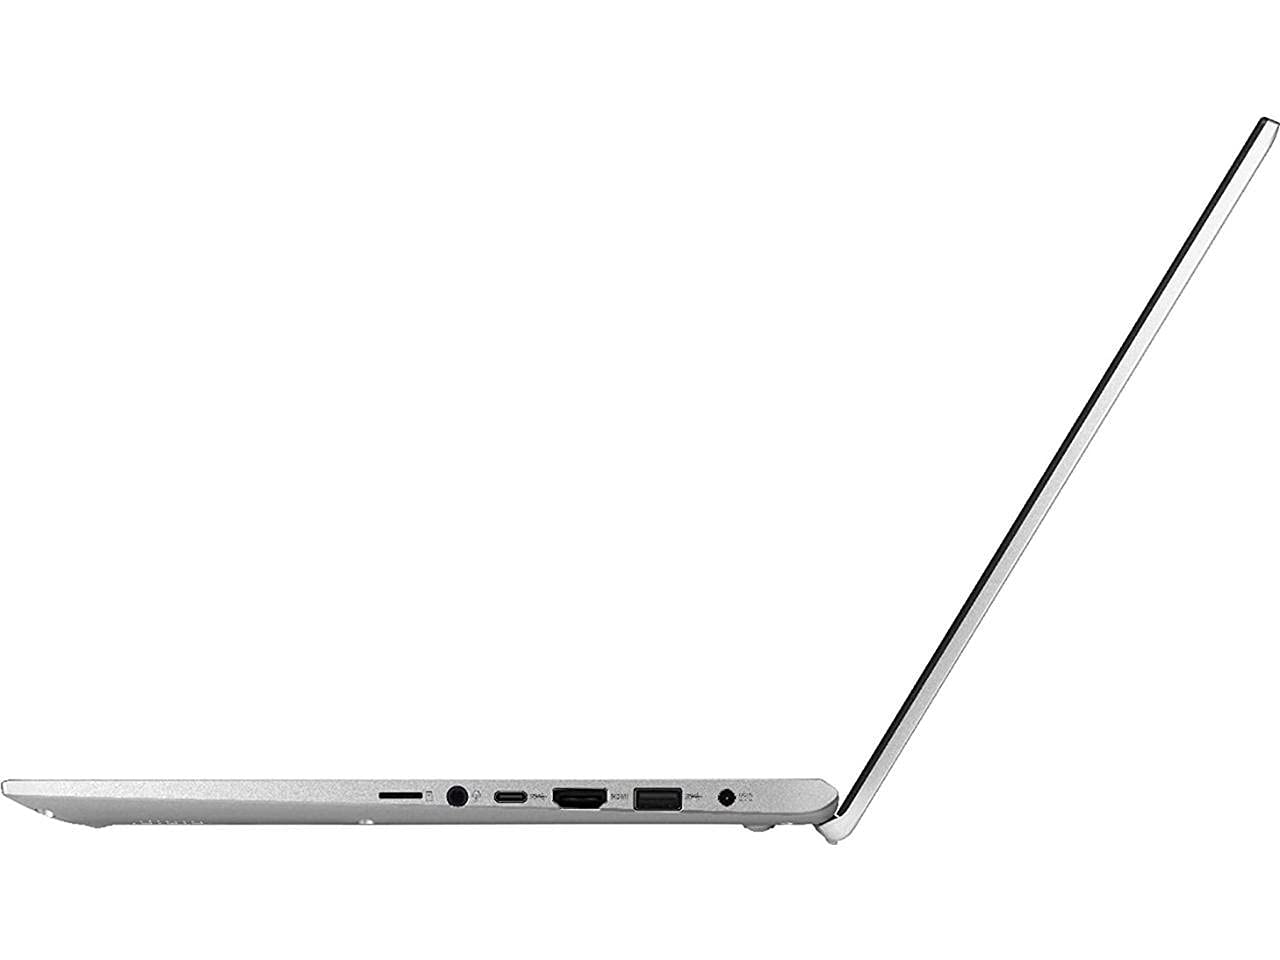 2021 Asus VivoBook S17 S712JA 17.3